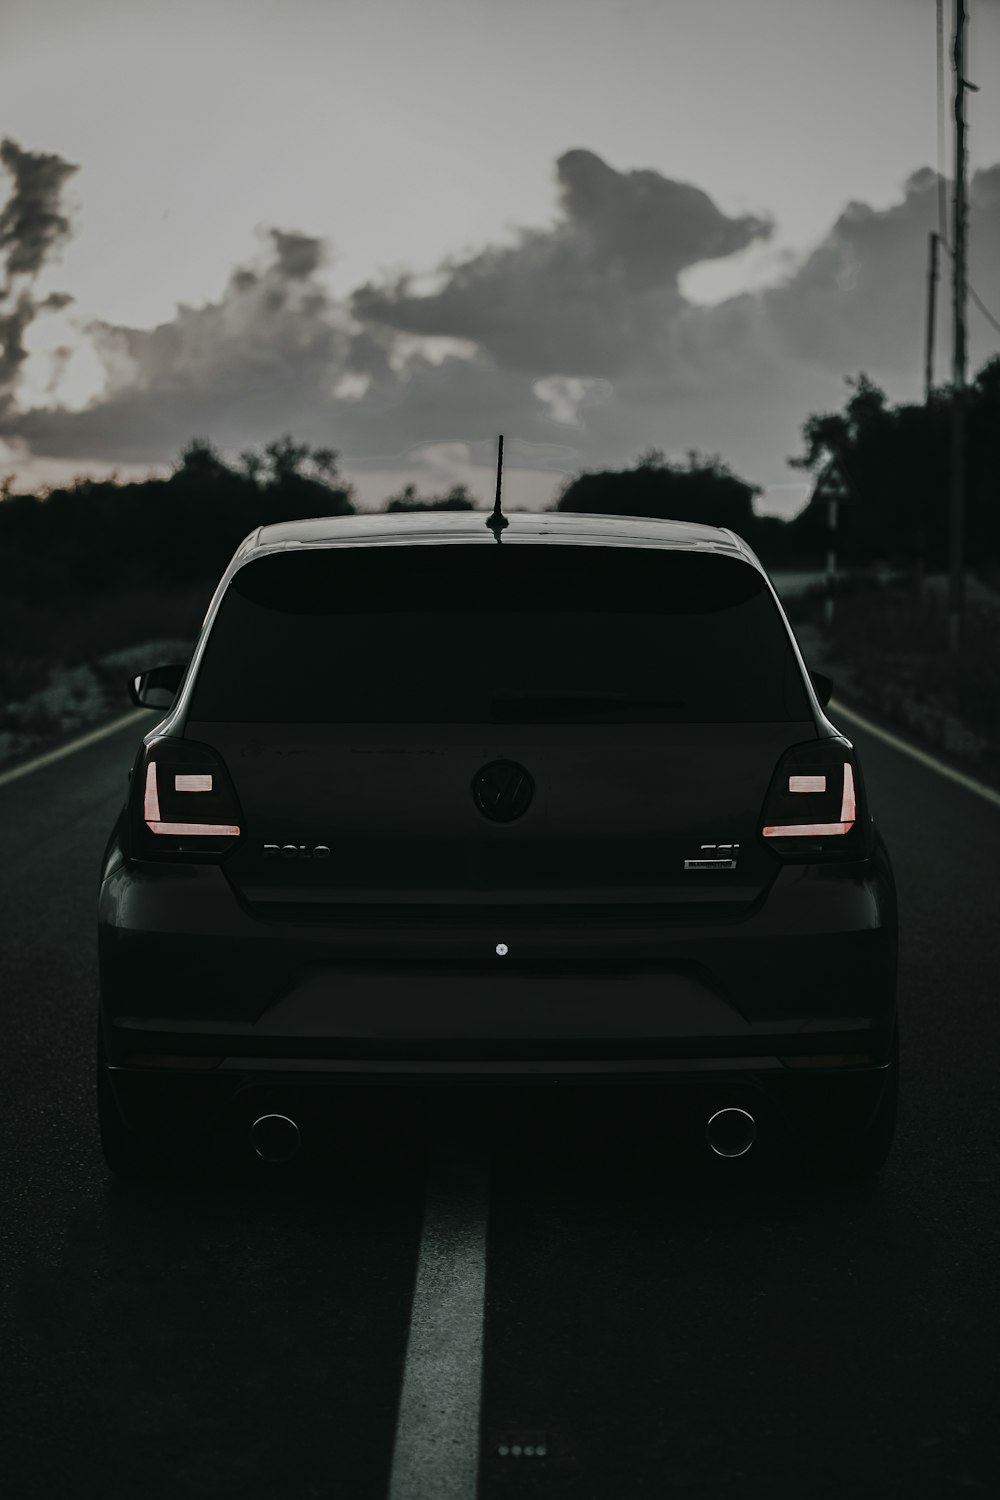 black honda car on road